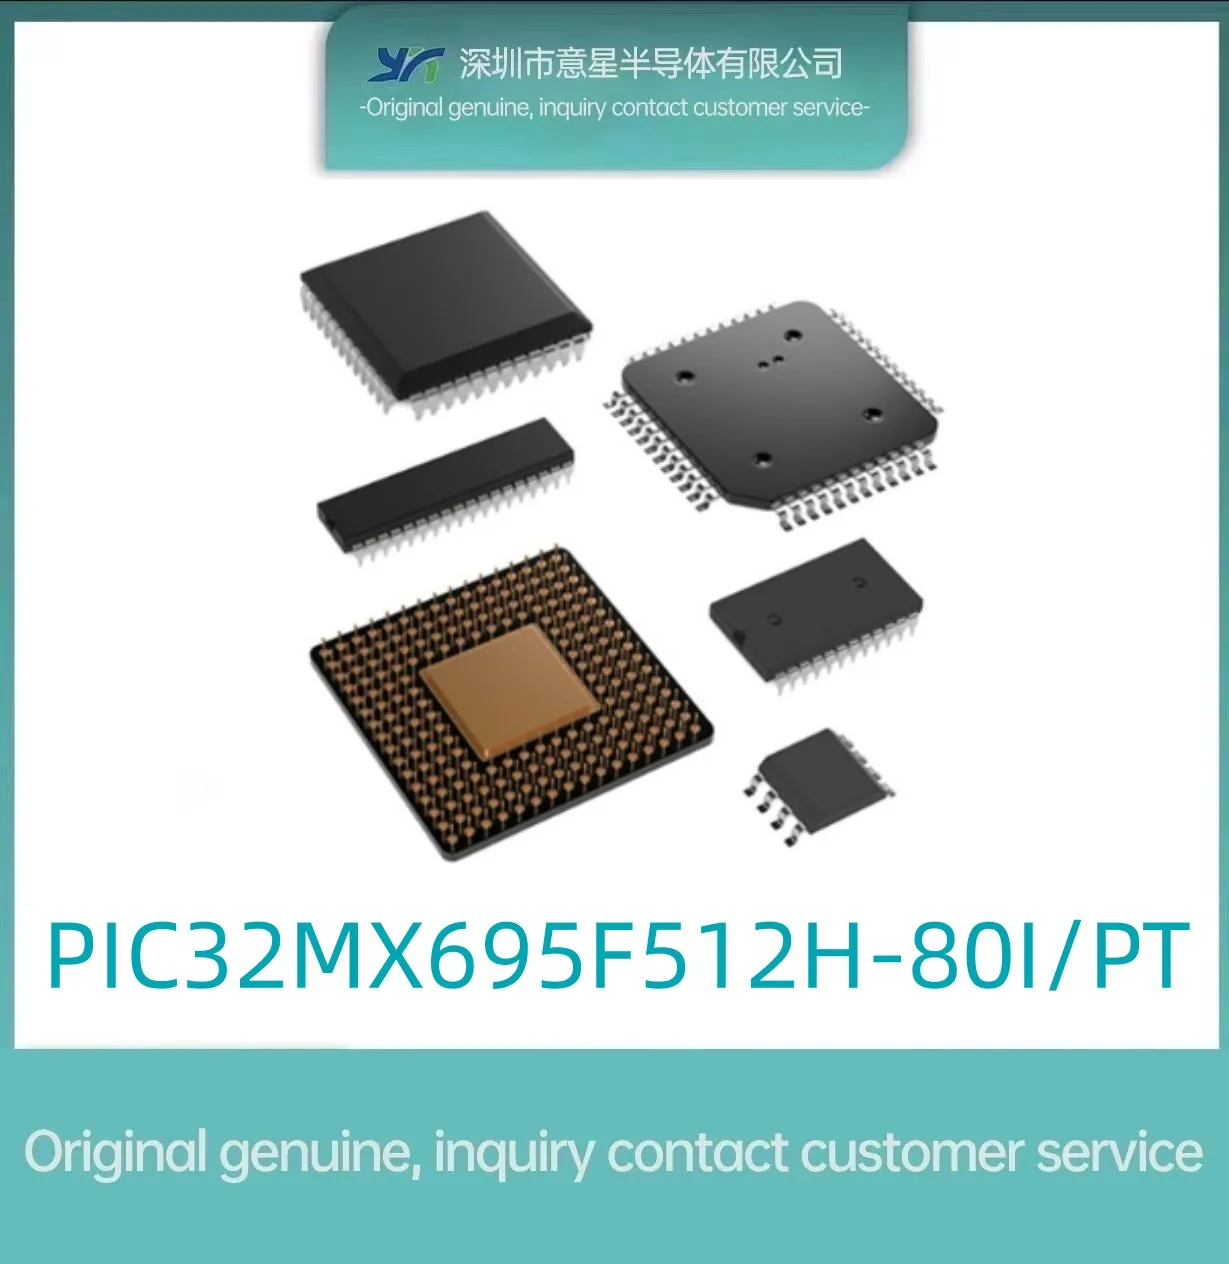 PIC32MX695F512H-80I/PT посылка QFP64 микроконтроллер MUC оригинальный на складе . ' - ' . 0